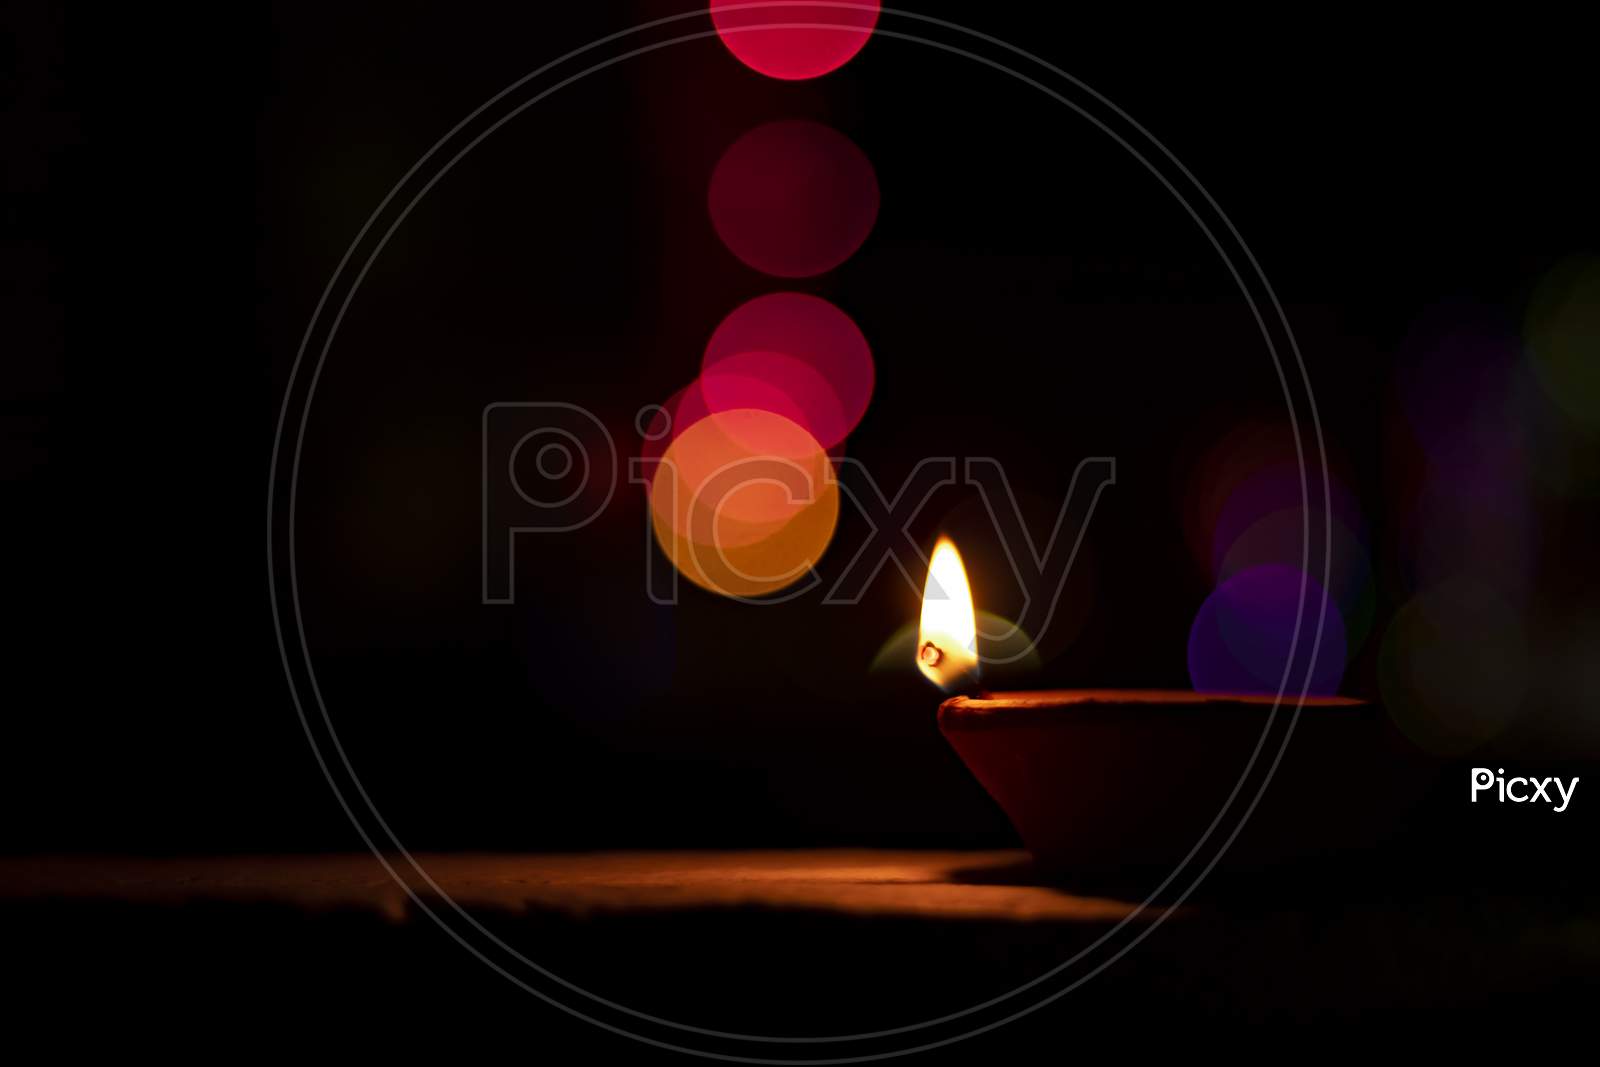 Happy Diwali - Lit Diya Lamp On Street At Night With Bokeh Background